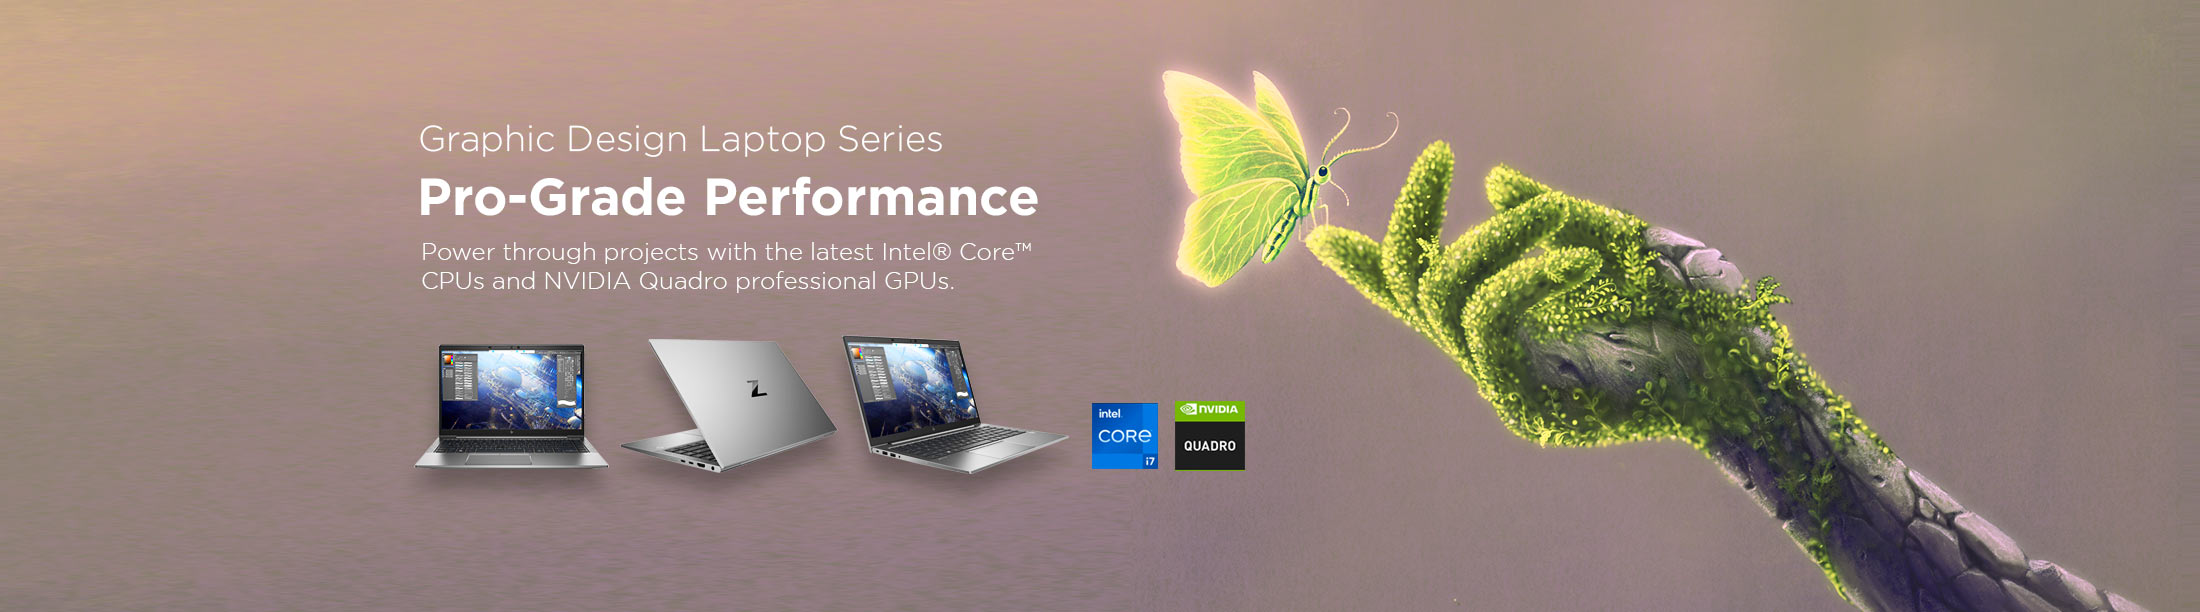 Pro-Grade Performance - Graphic Design Laptops Series at MESH